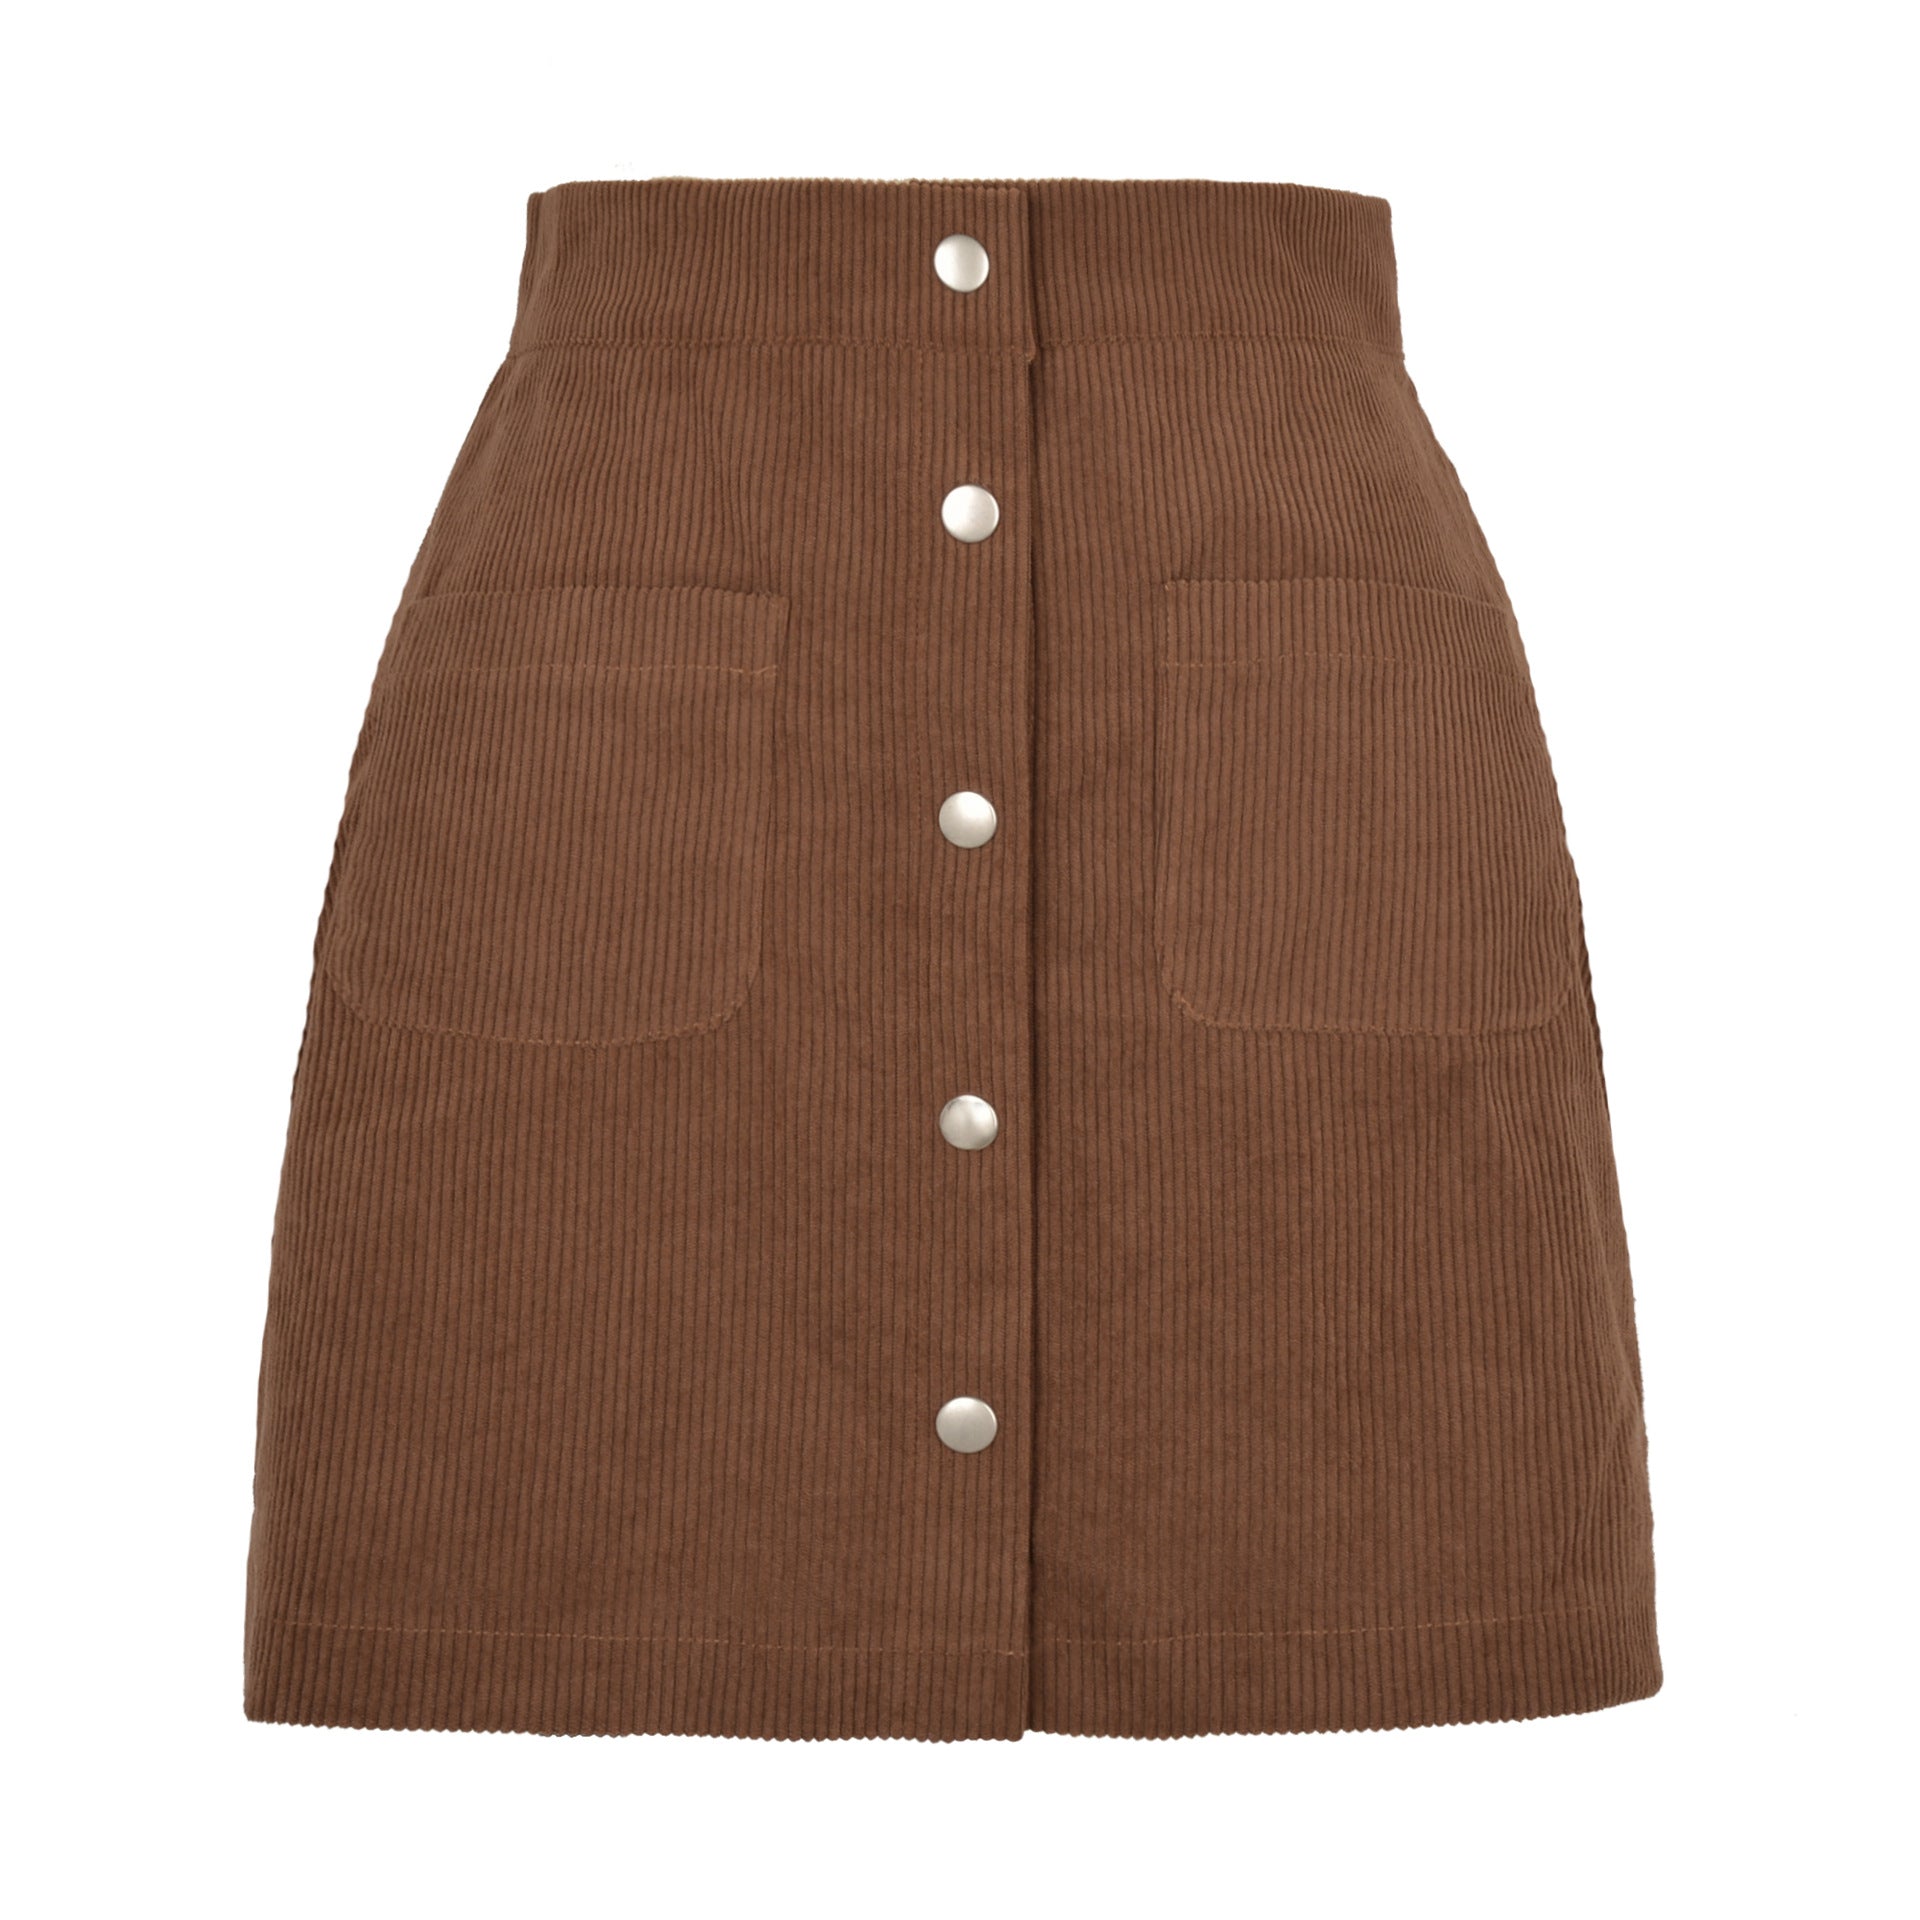 Sasha’s Slim Fit Solid Skirt - S / Brown